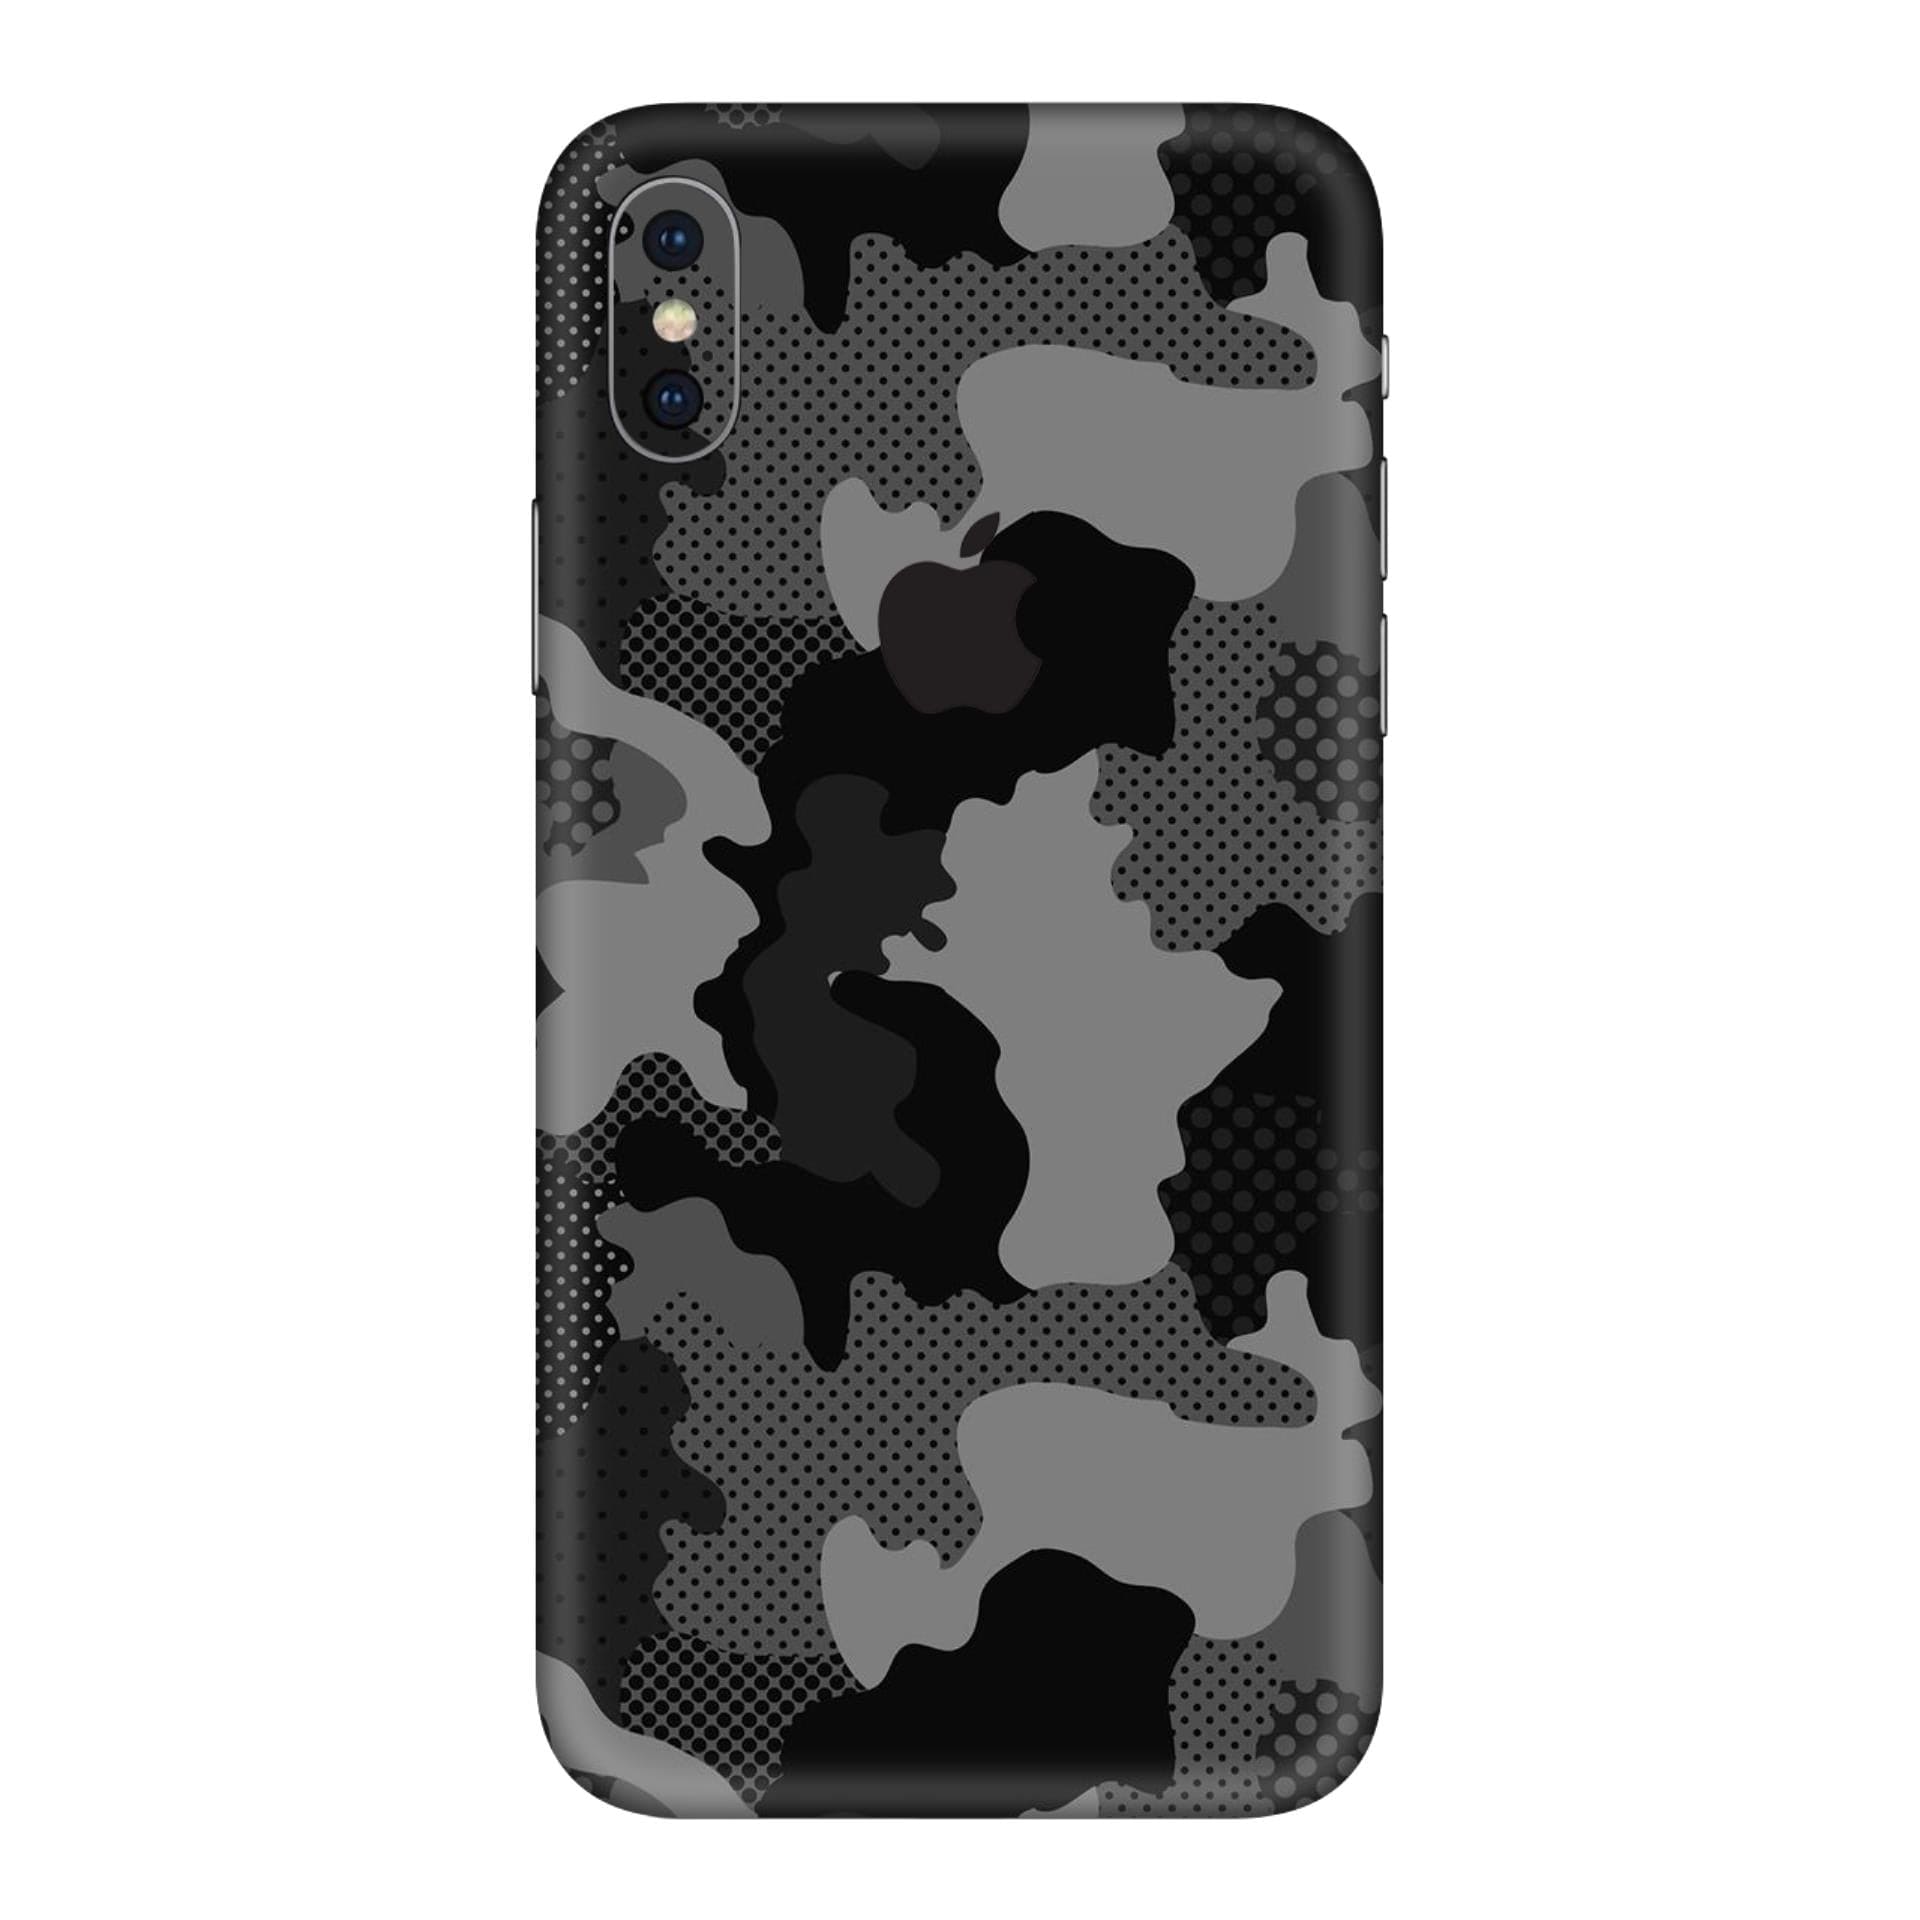 iphone XS Military Black Camo skins